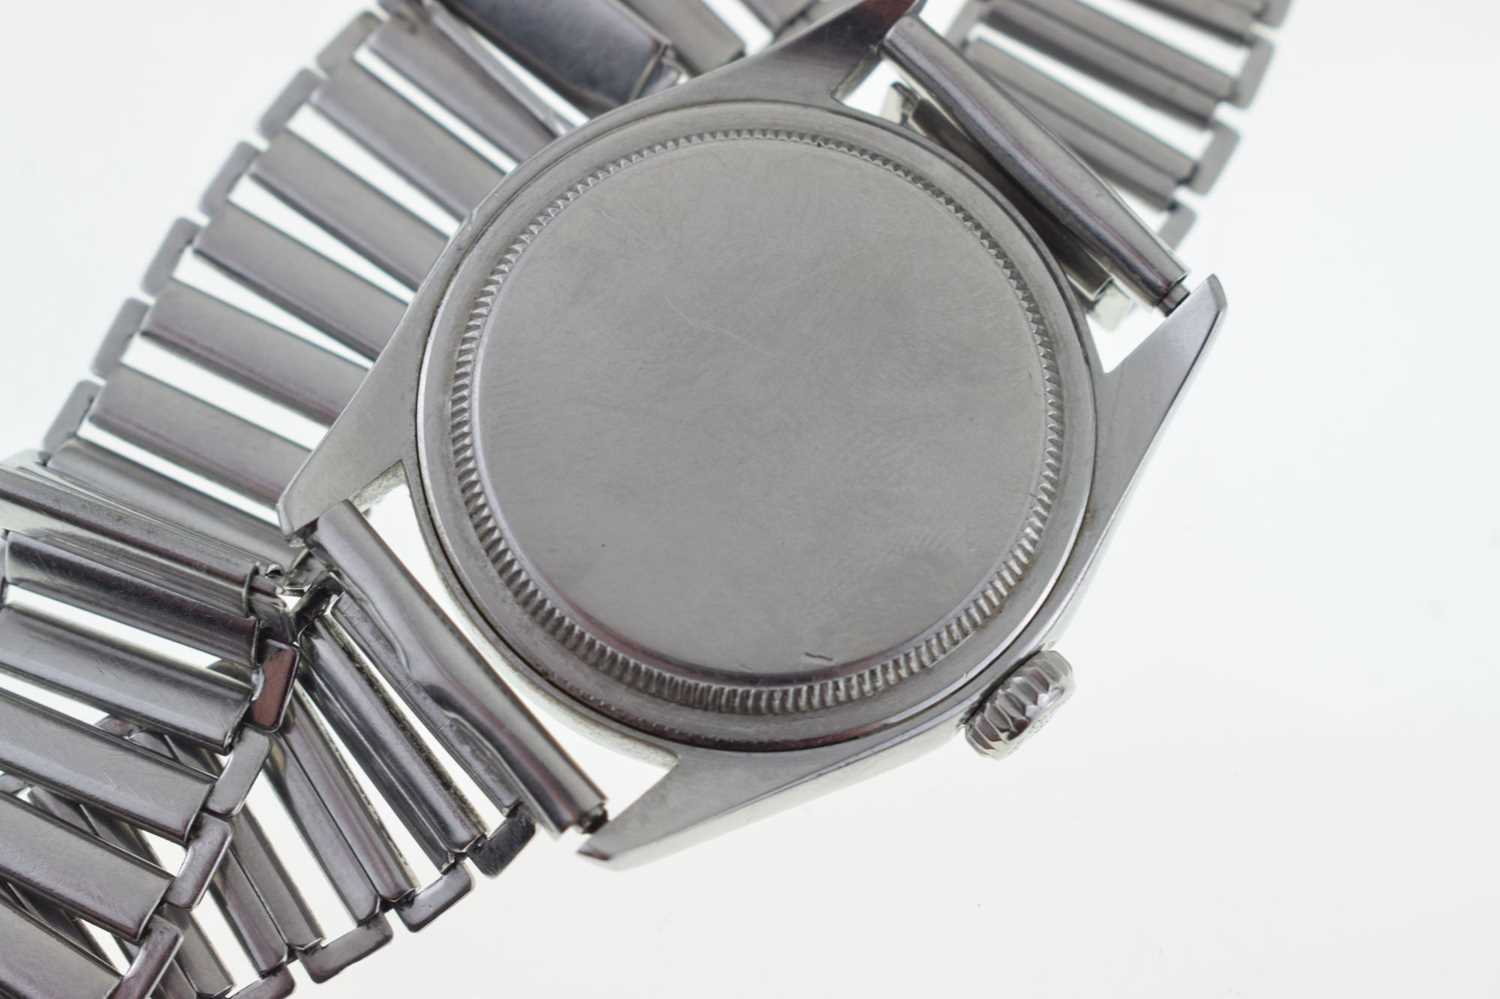 Rolex - Gentleman's Oyster stainless steel wristwatch - Image 8 of 11